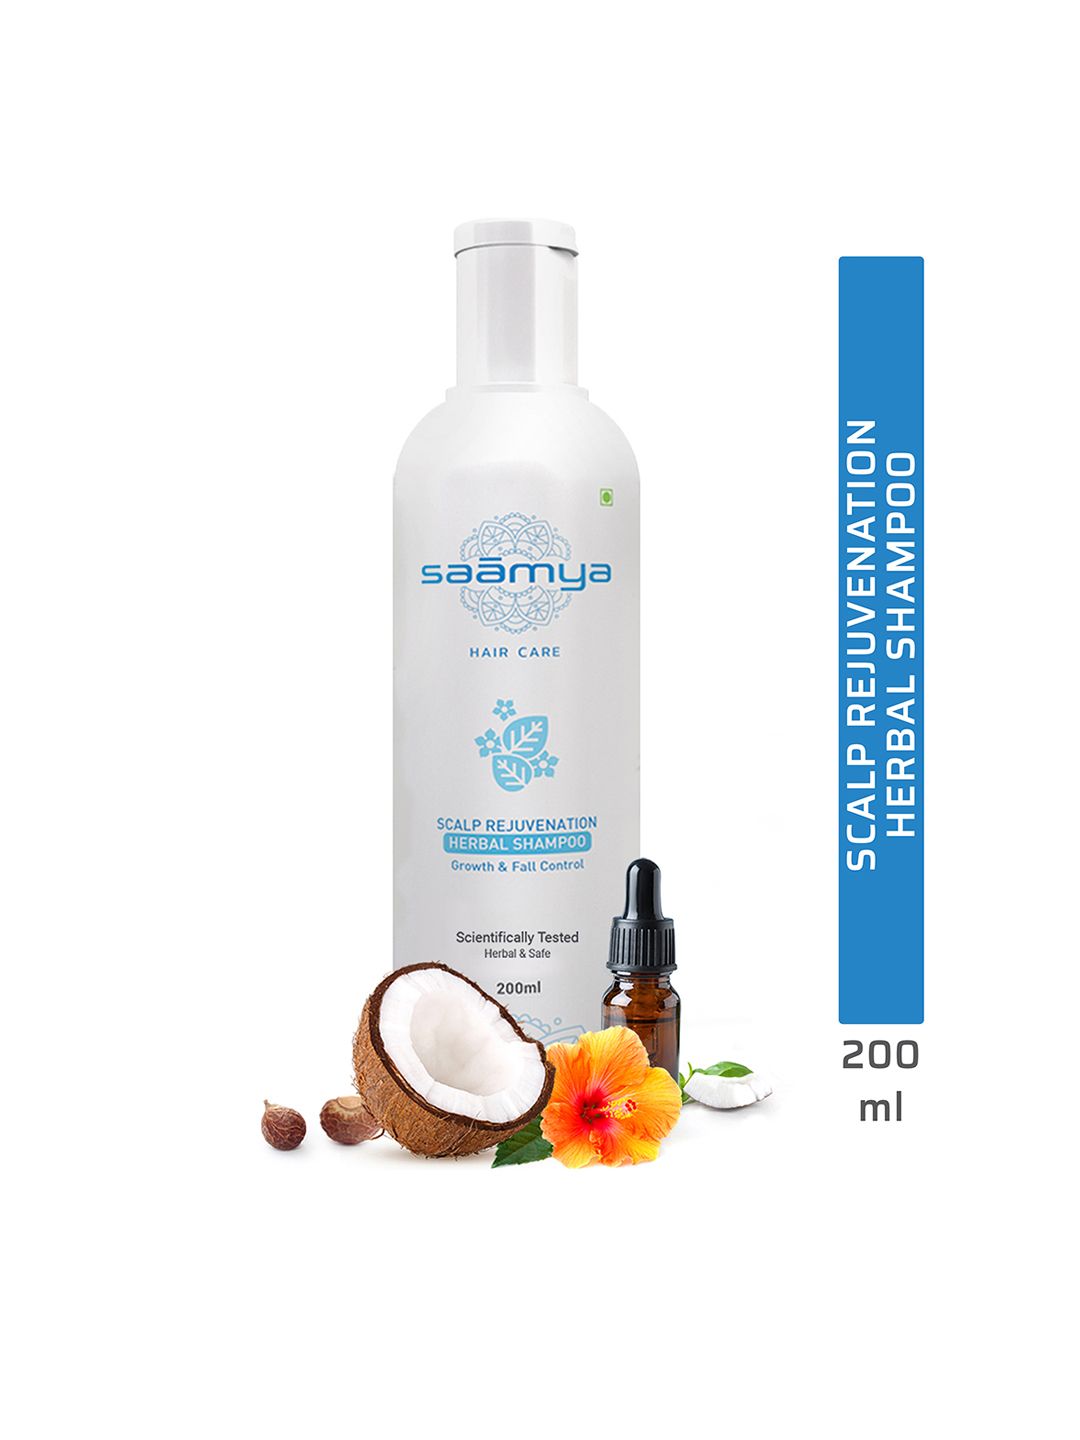 Saamya Scalp Rejuvenation Herbal Shampoo 200 ml Price in India